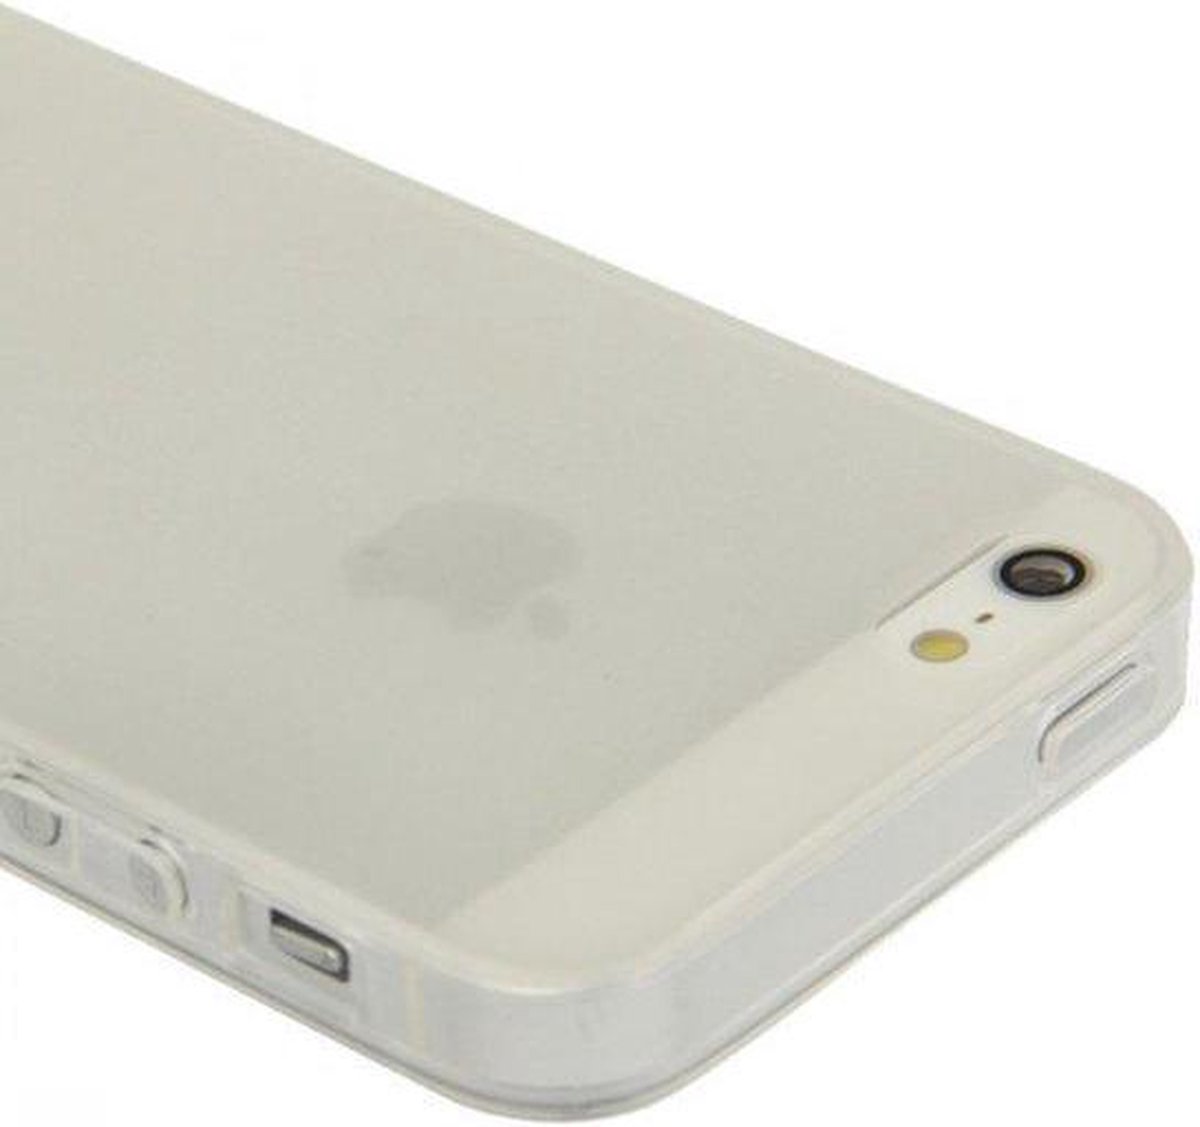 geschikt voor Apple iPhone 5 / 5S Ultra Dun Siliconen Gel TPU Hoesje/ Hoes/ Case/ Cover Transparant